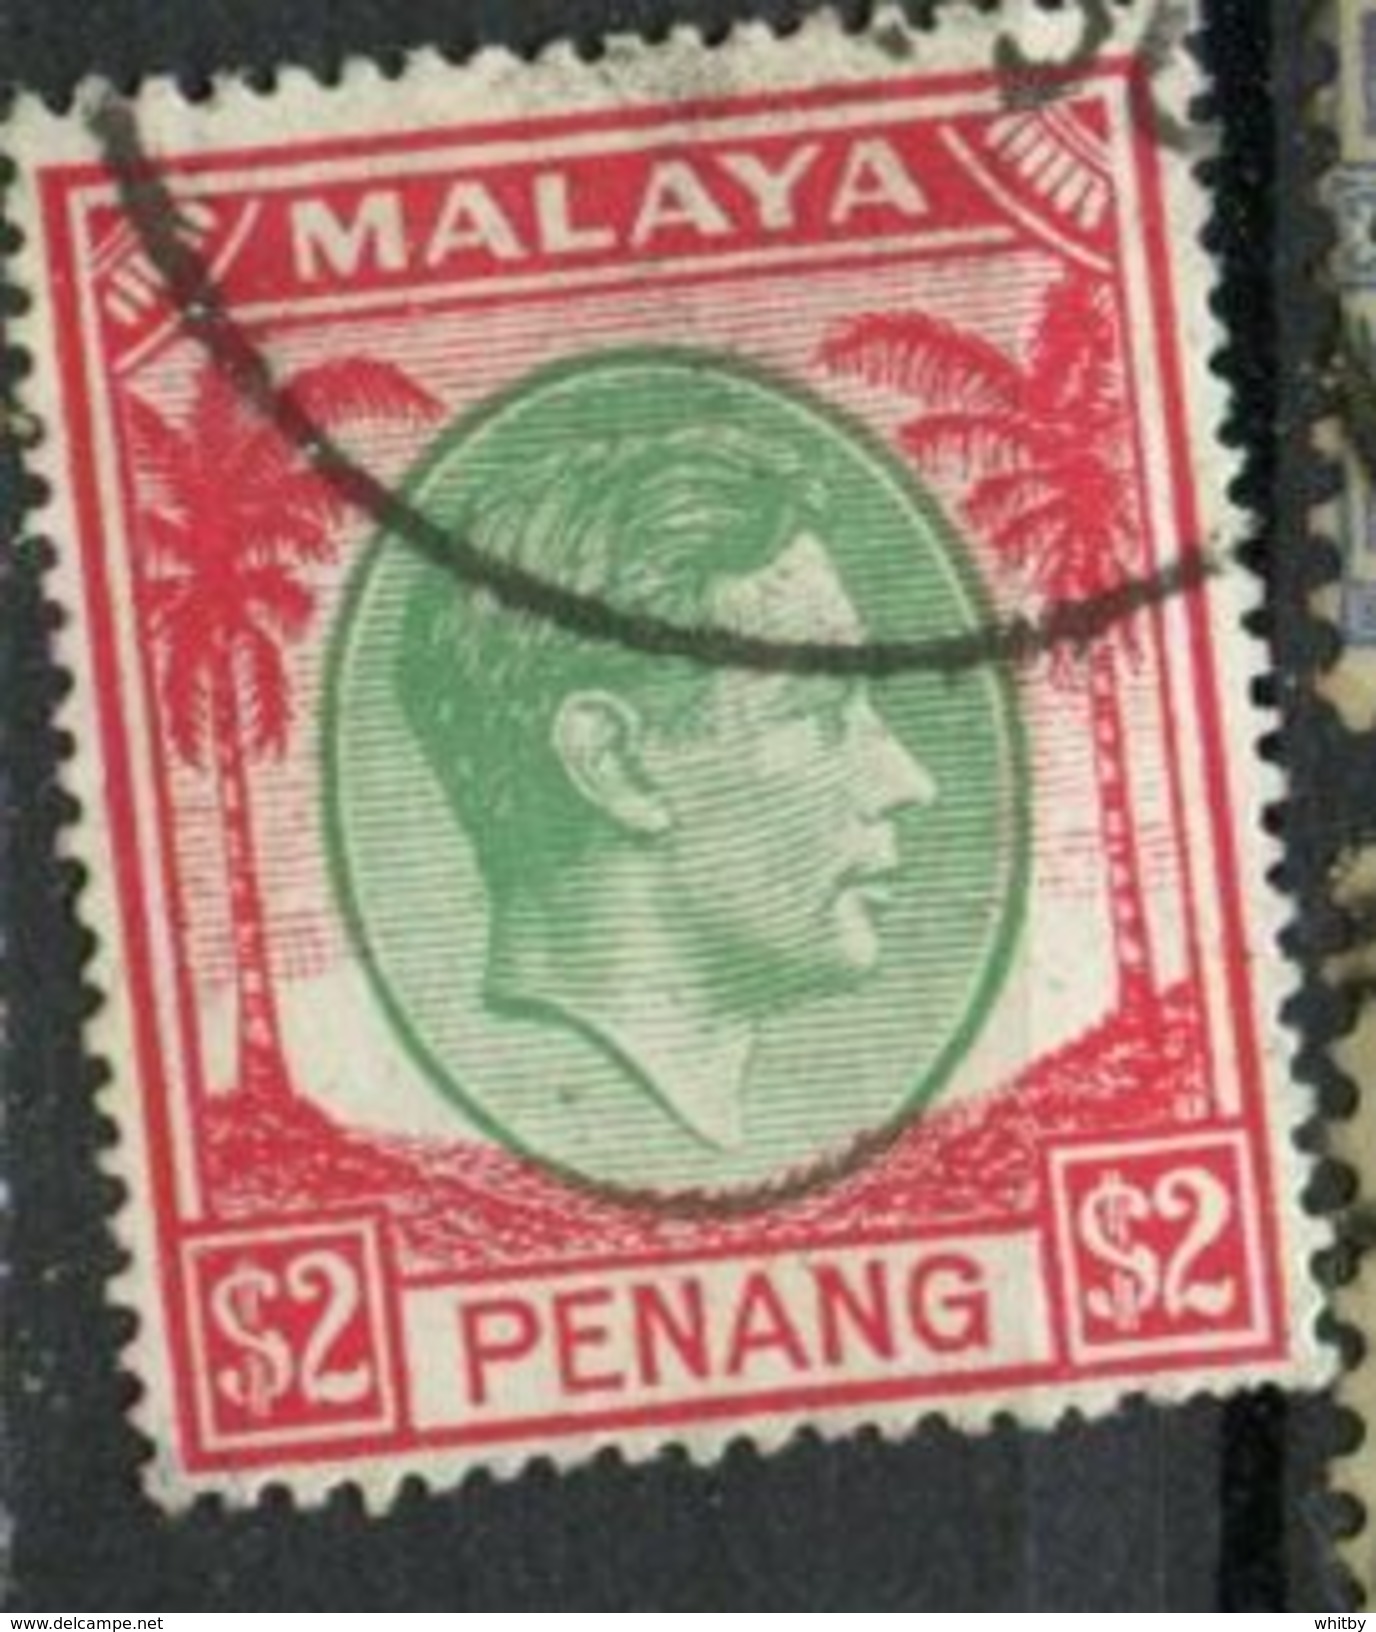 Malaya Penang 1949  $2.00 King George Issue #21  Used - Penang